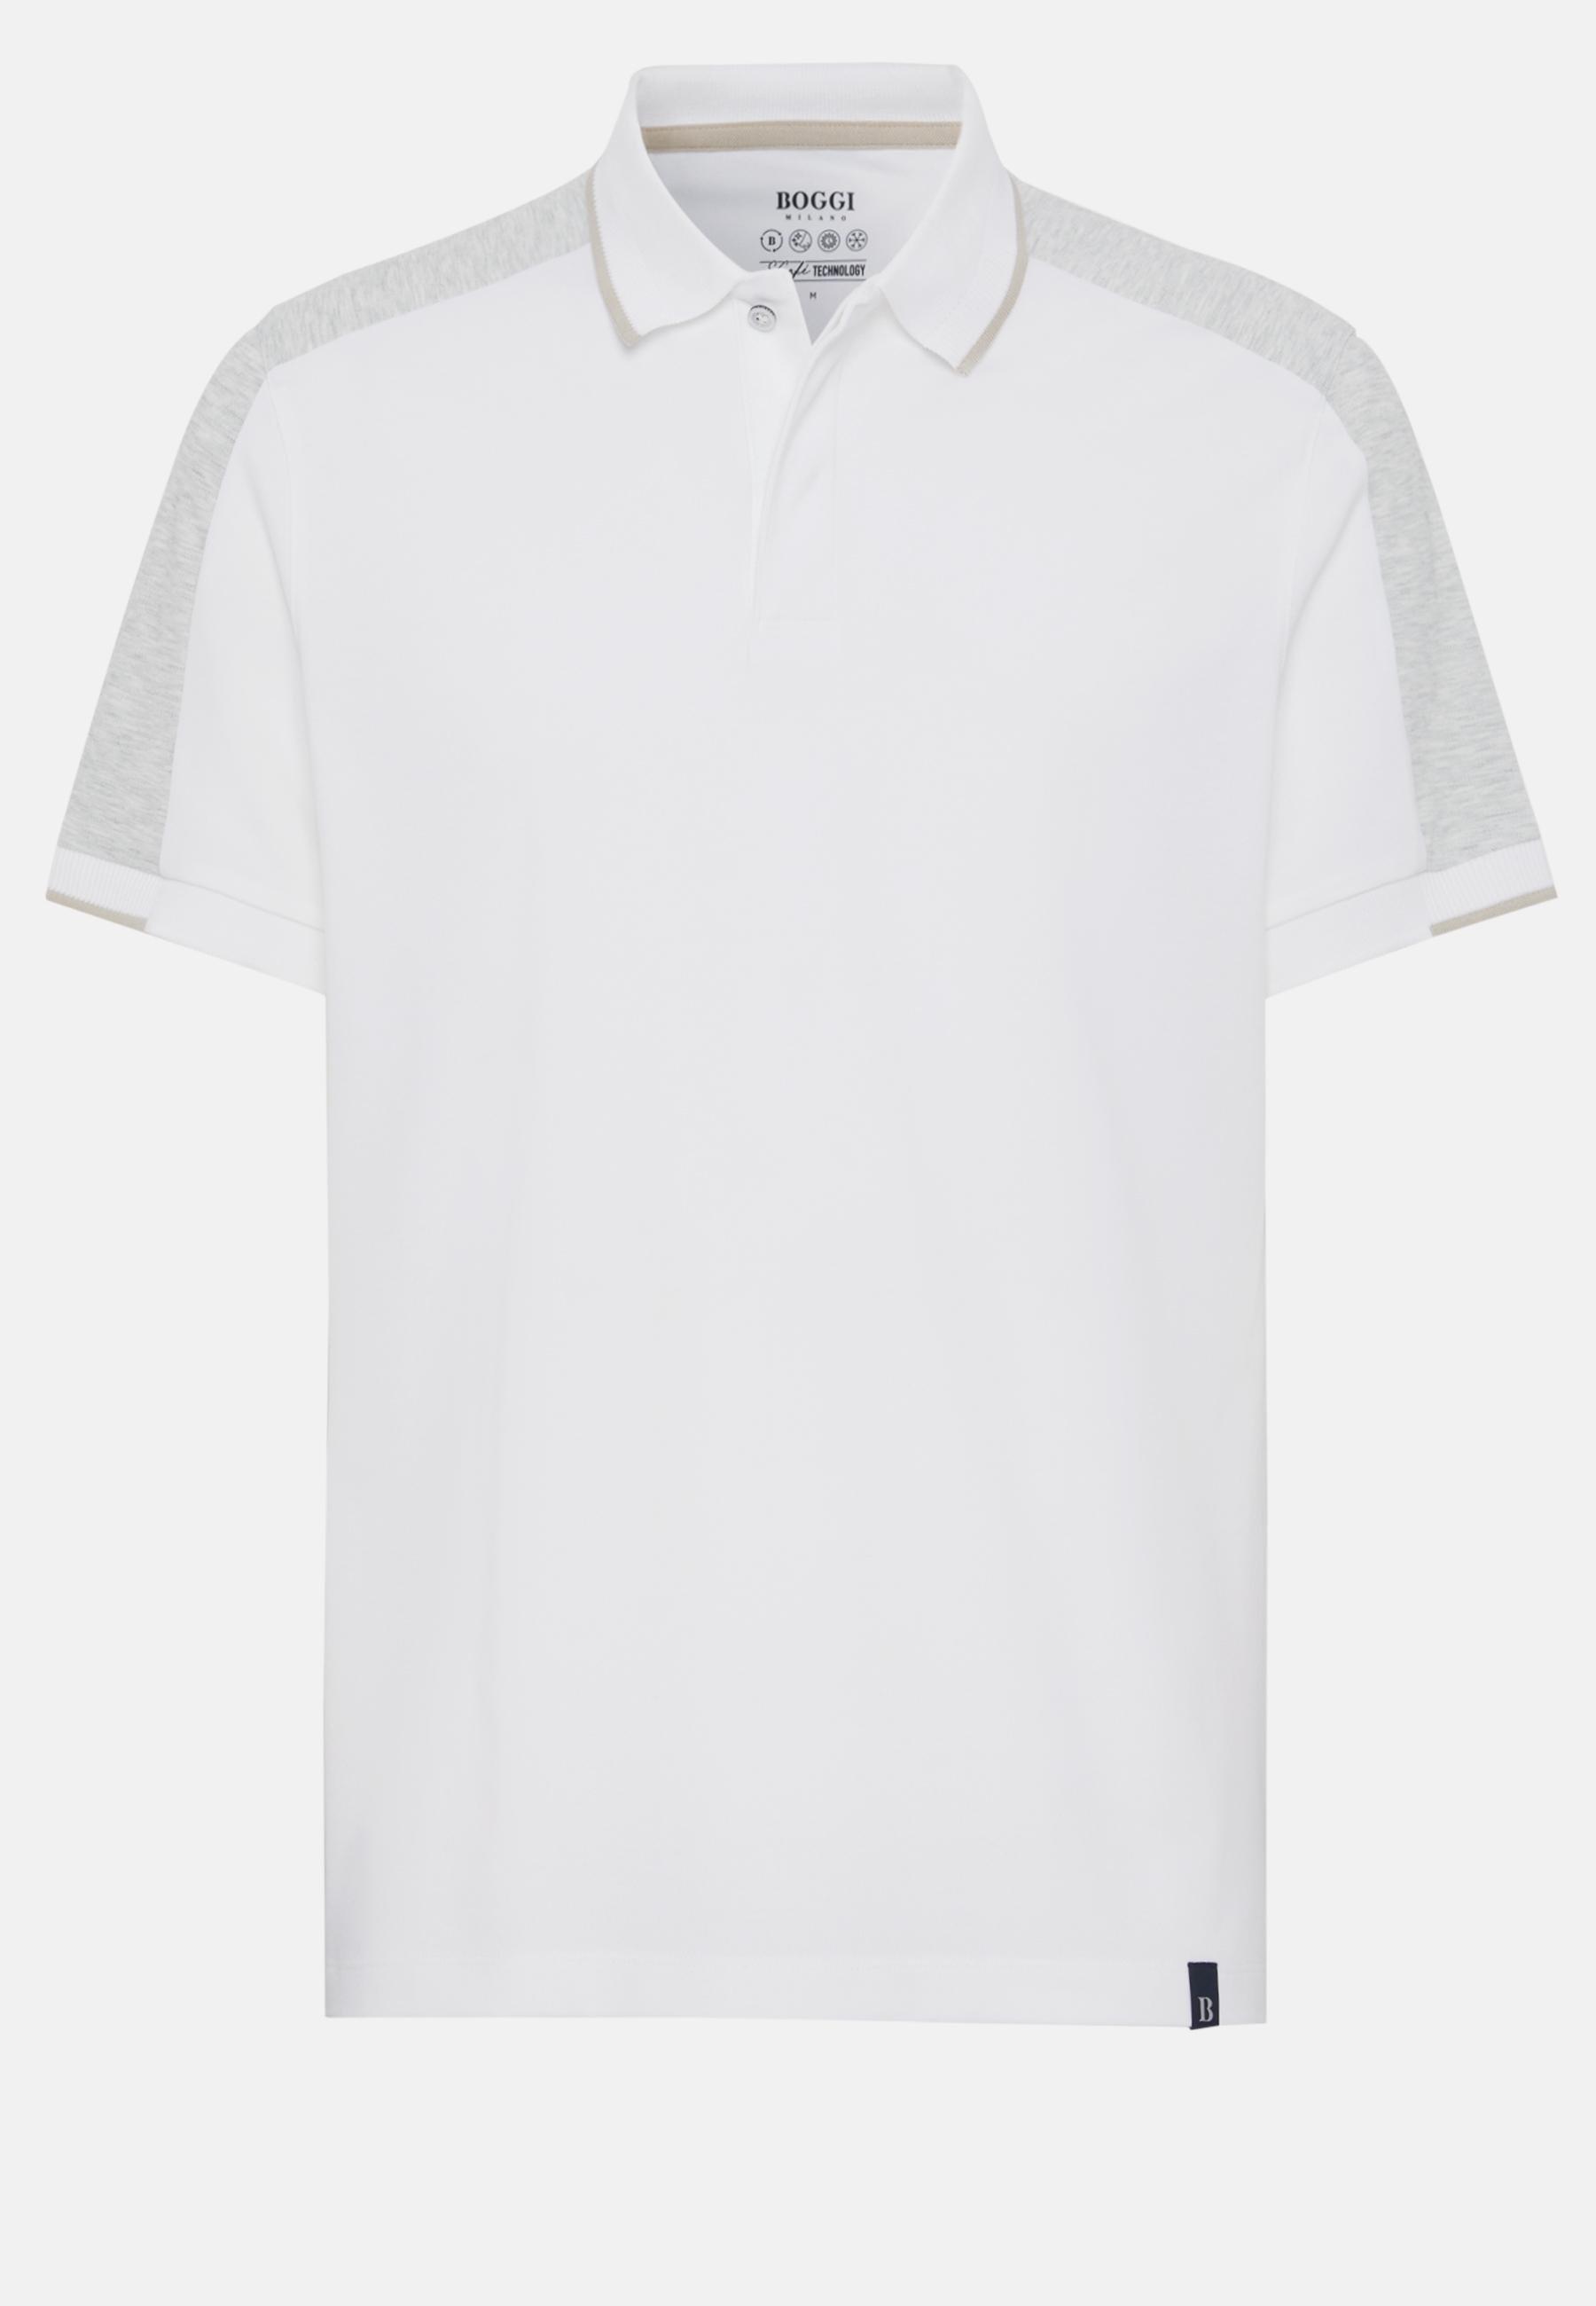 Boggi Milano - White High-Performance Pique Polo Shirt